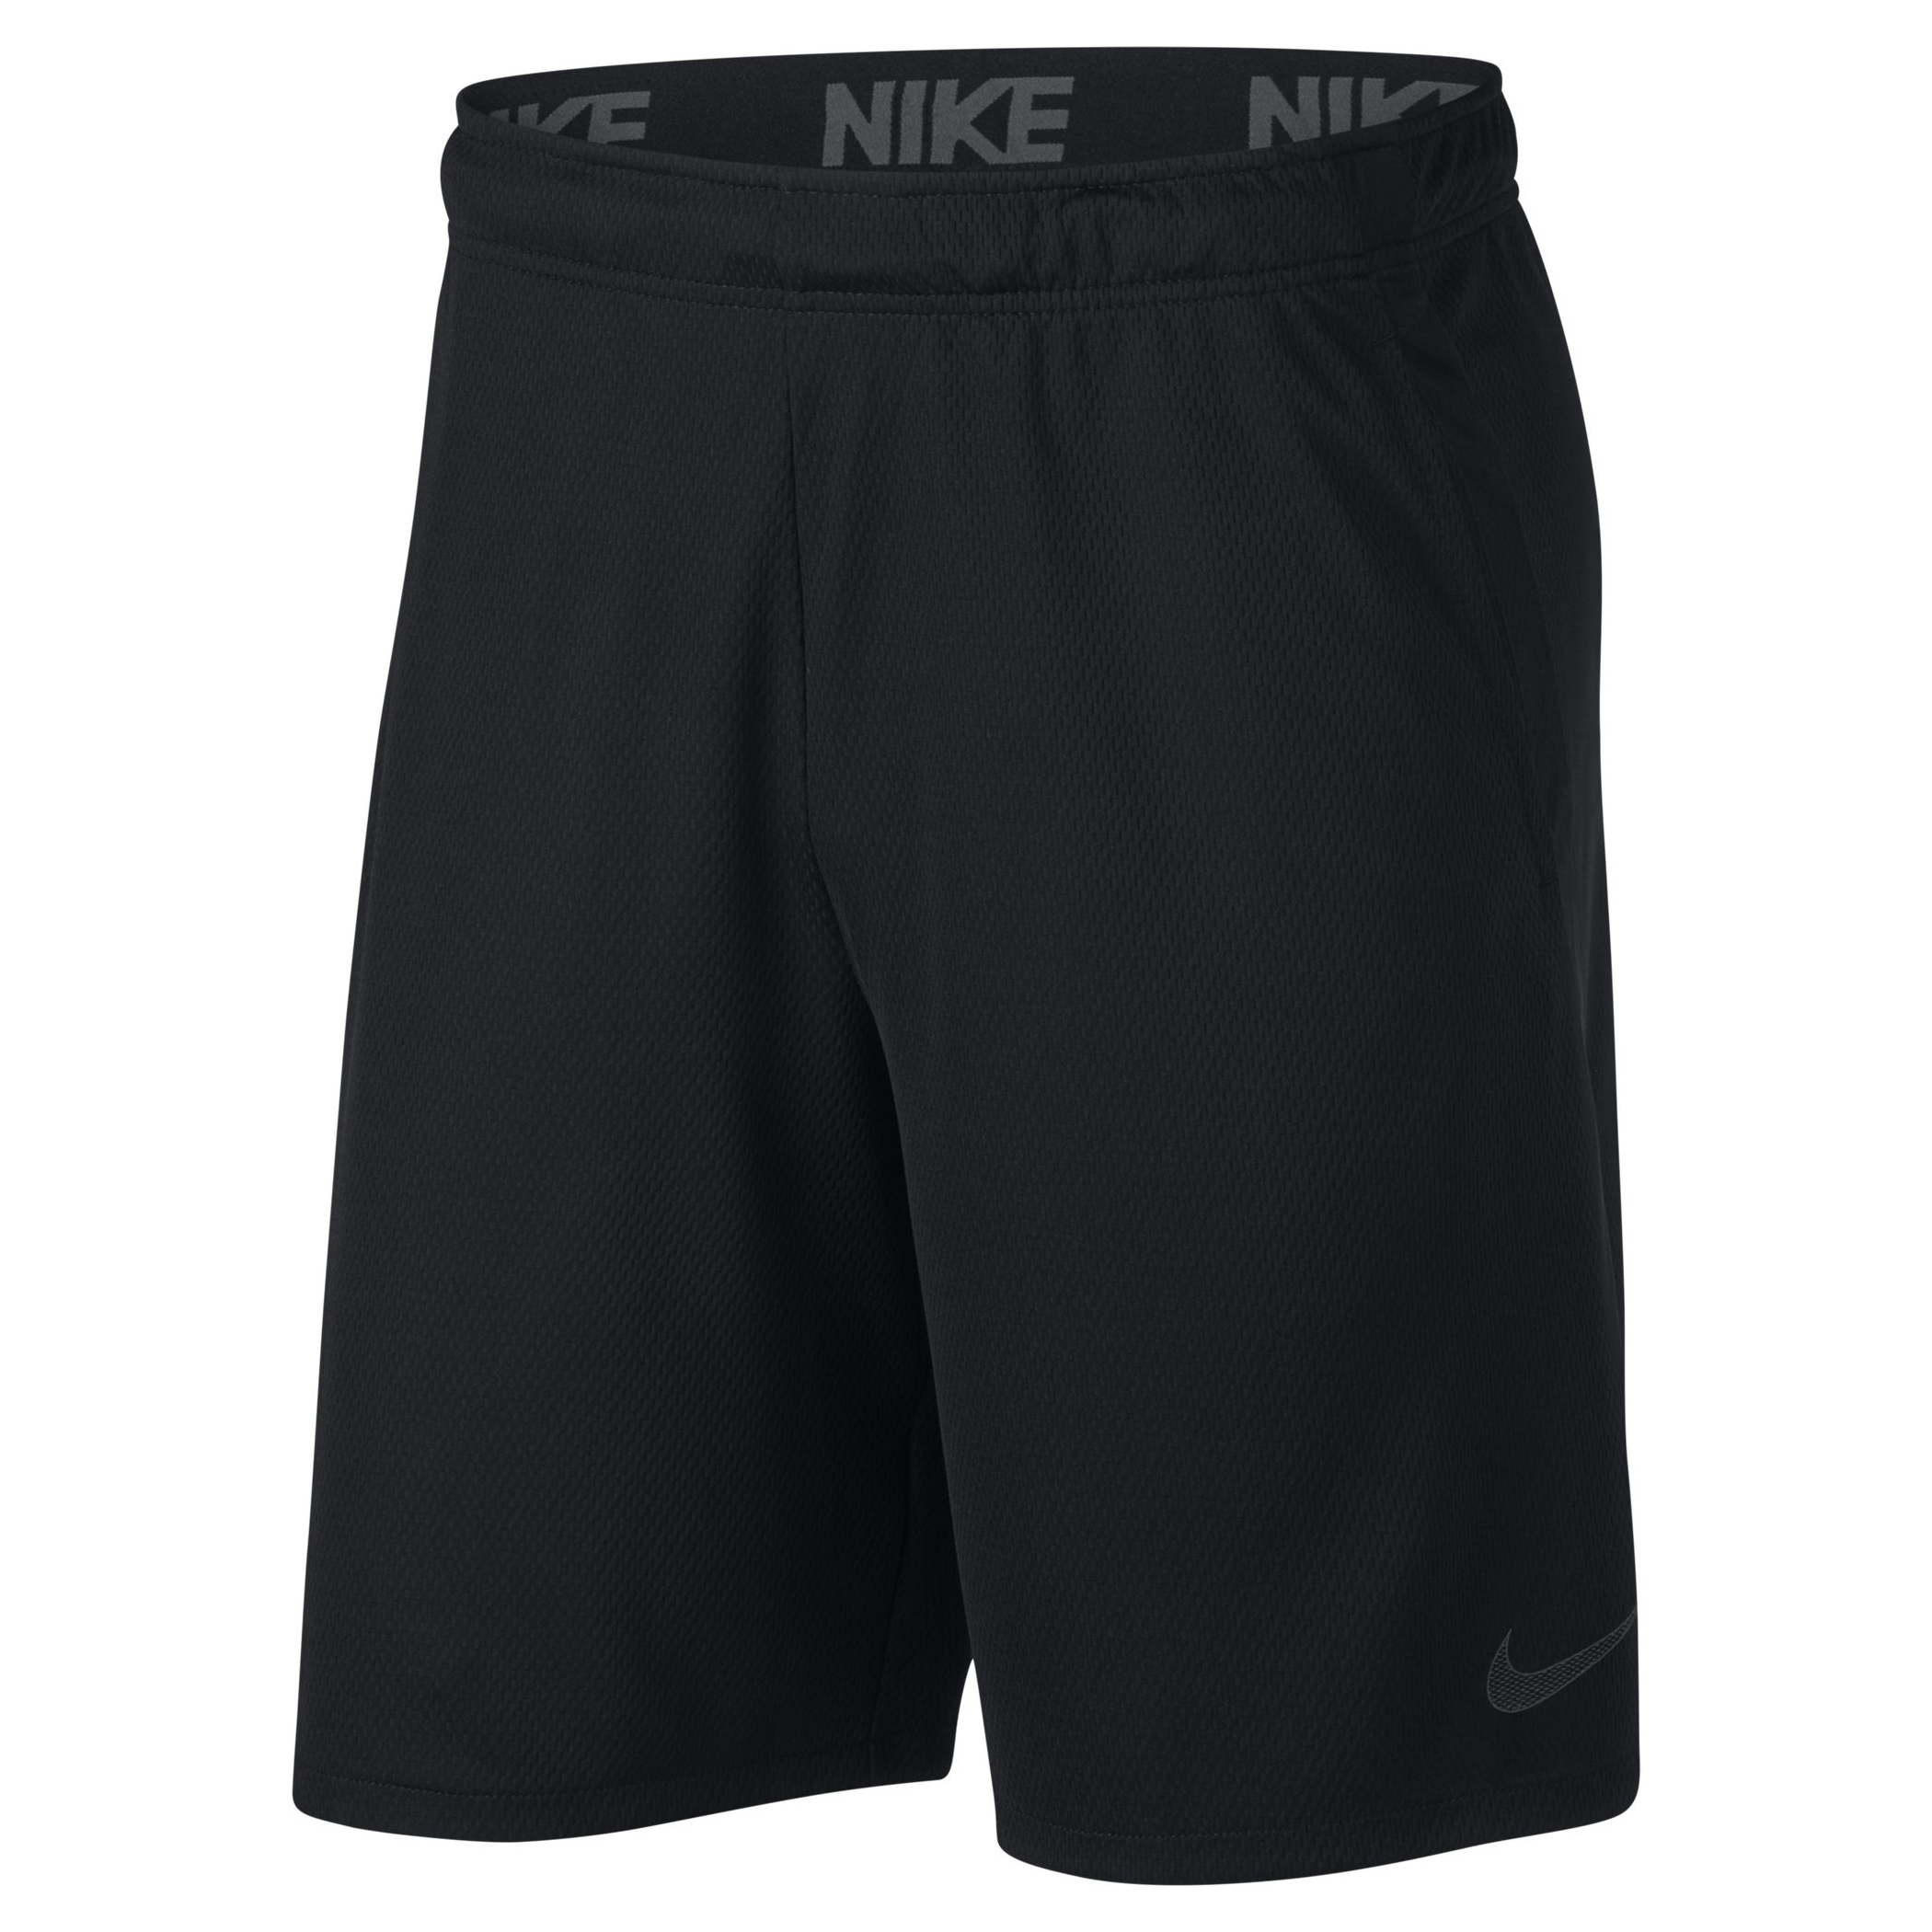 Шорты training. Nike Dri Fit шорты 4.0. Шорты найк драй фит. Nike Training Dry шорты. Шорты Nike Dri Fit мужские.